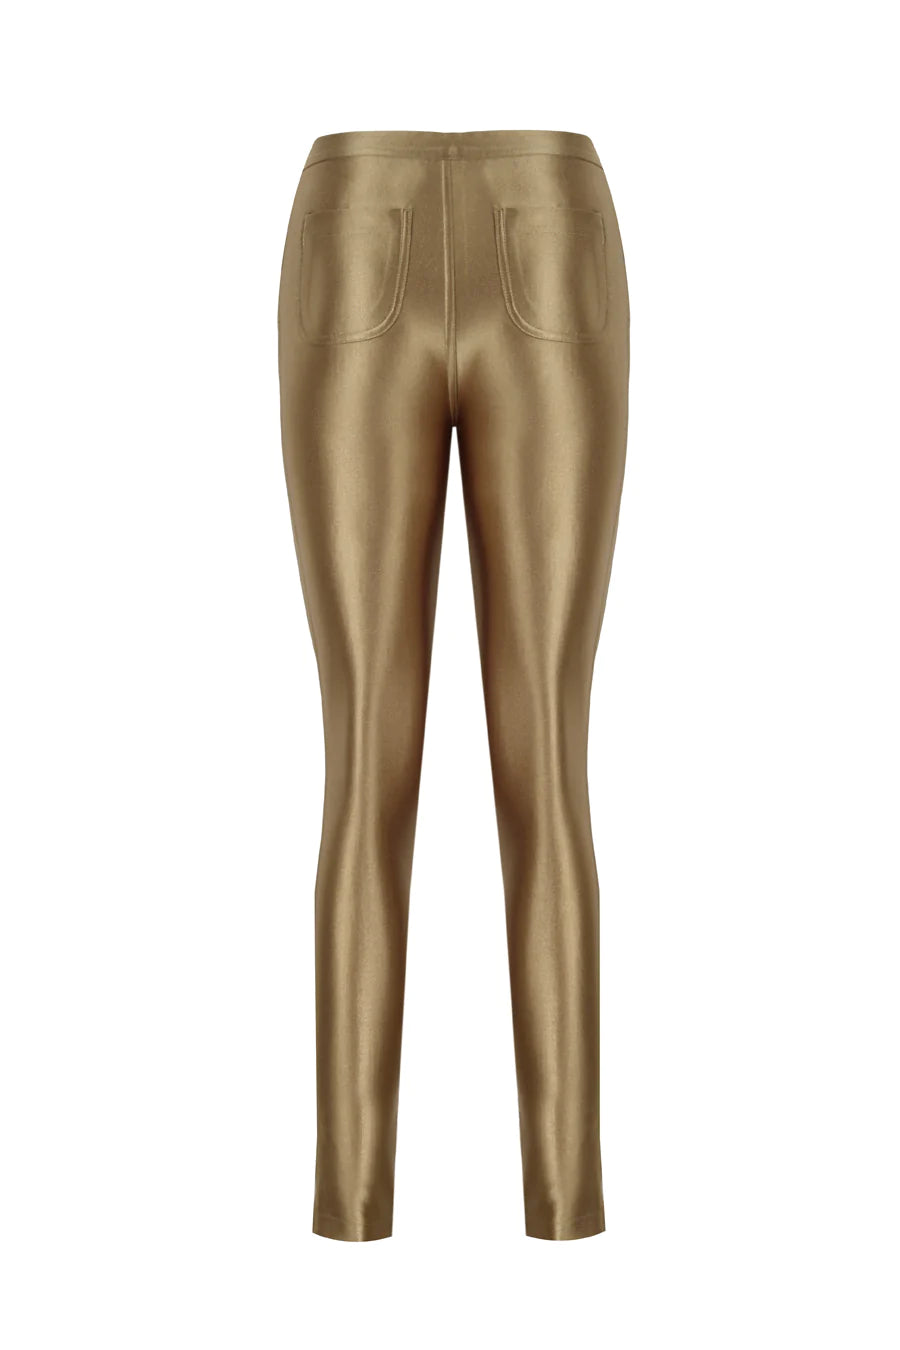 Cecile Shiny Pants - Gold Shiny